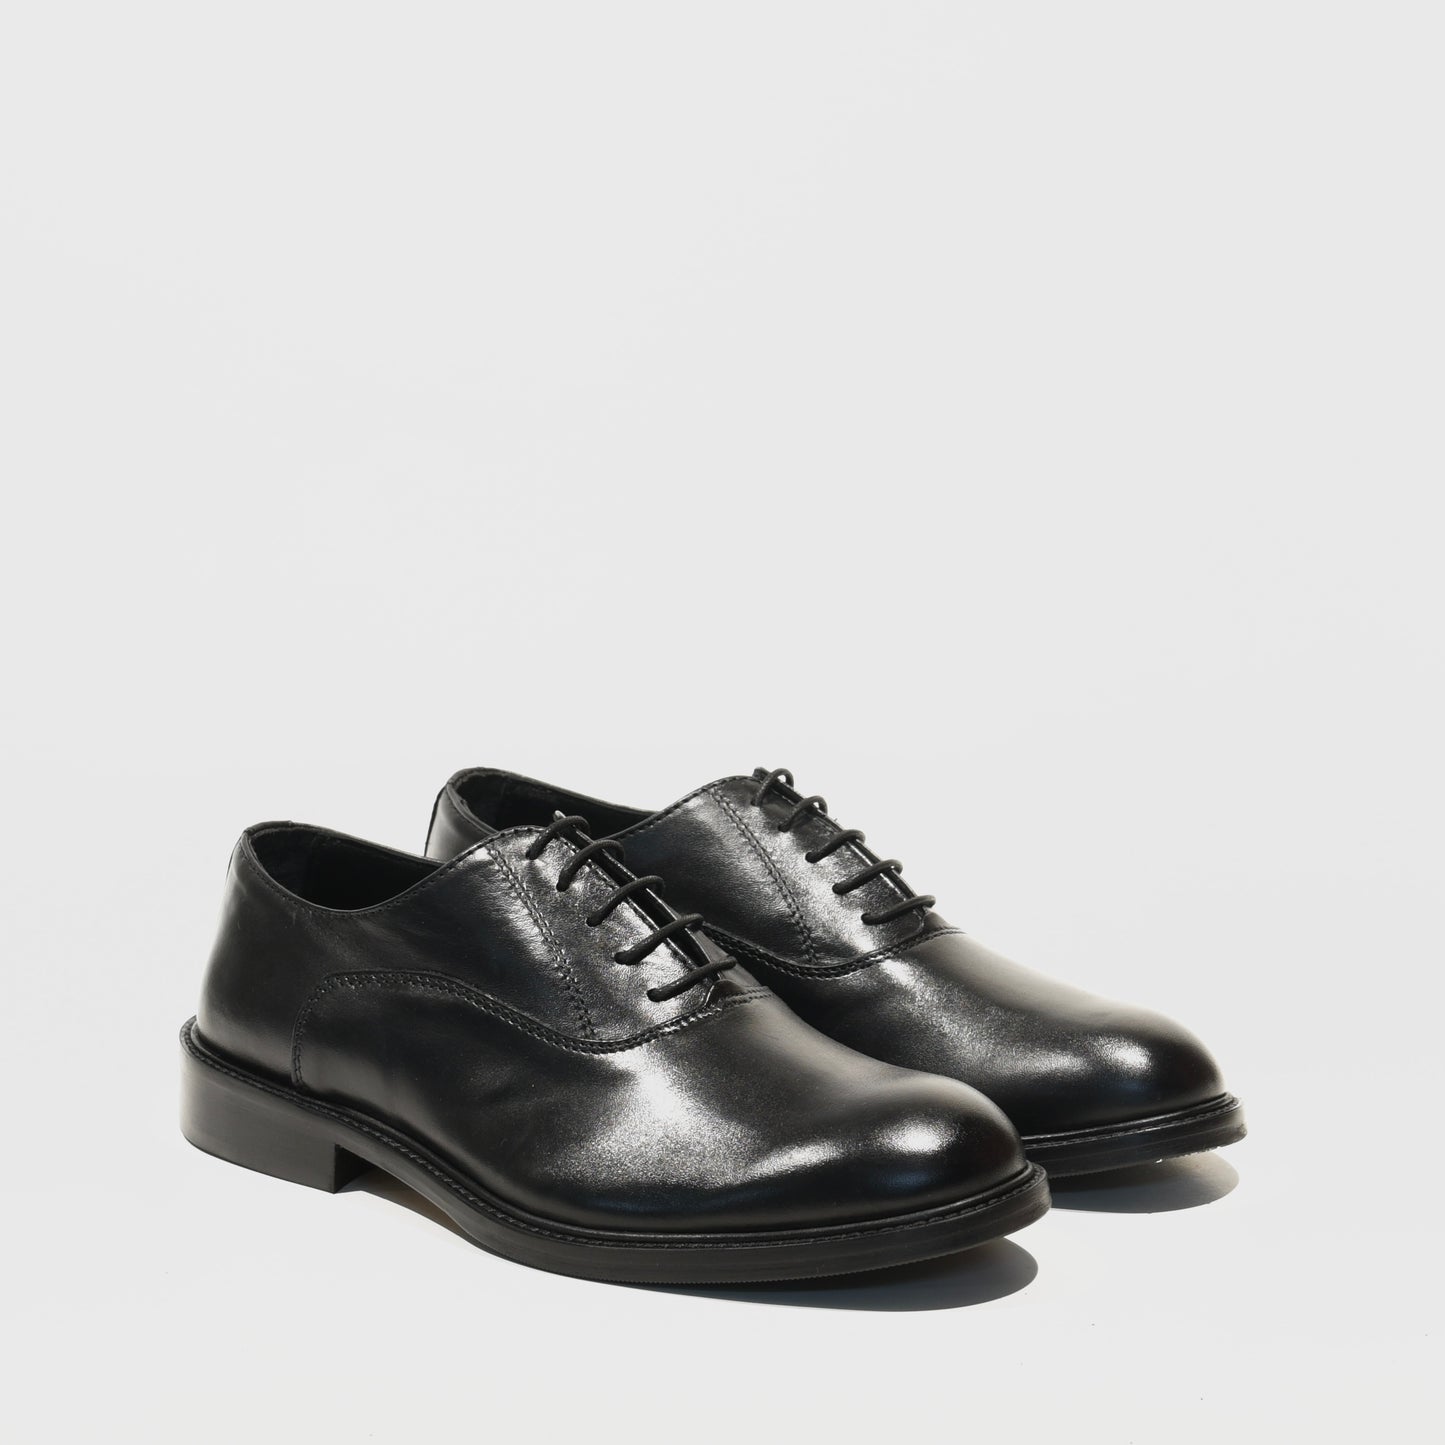 Shalapi Italian classic shoes for men in Black